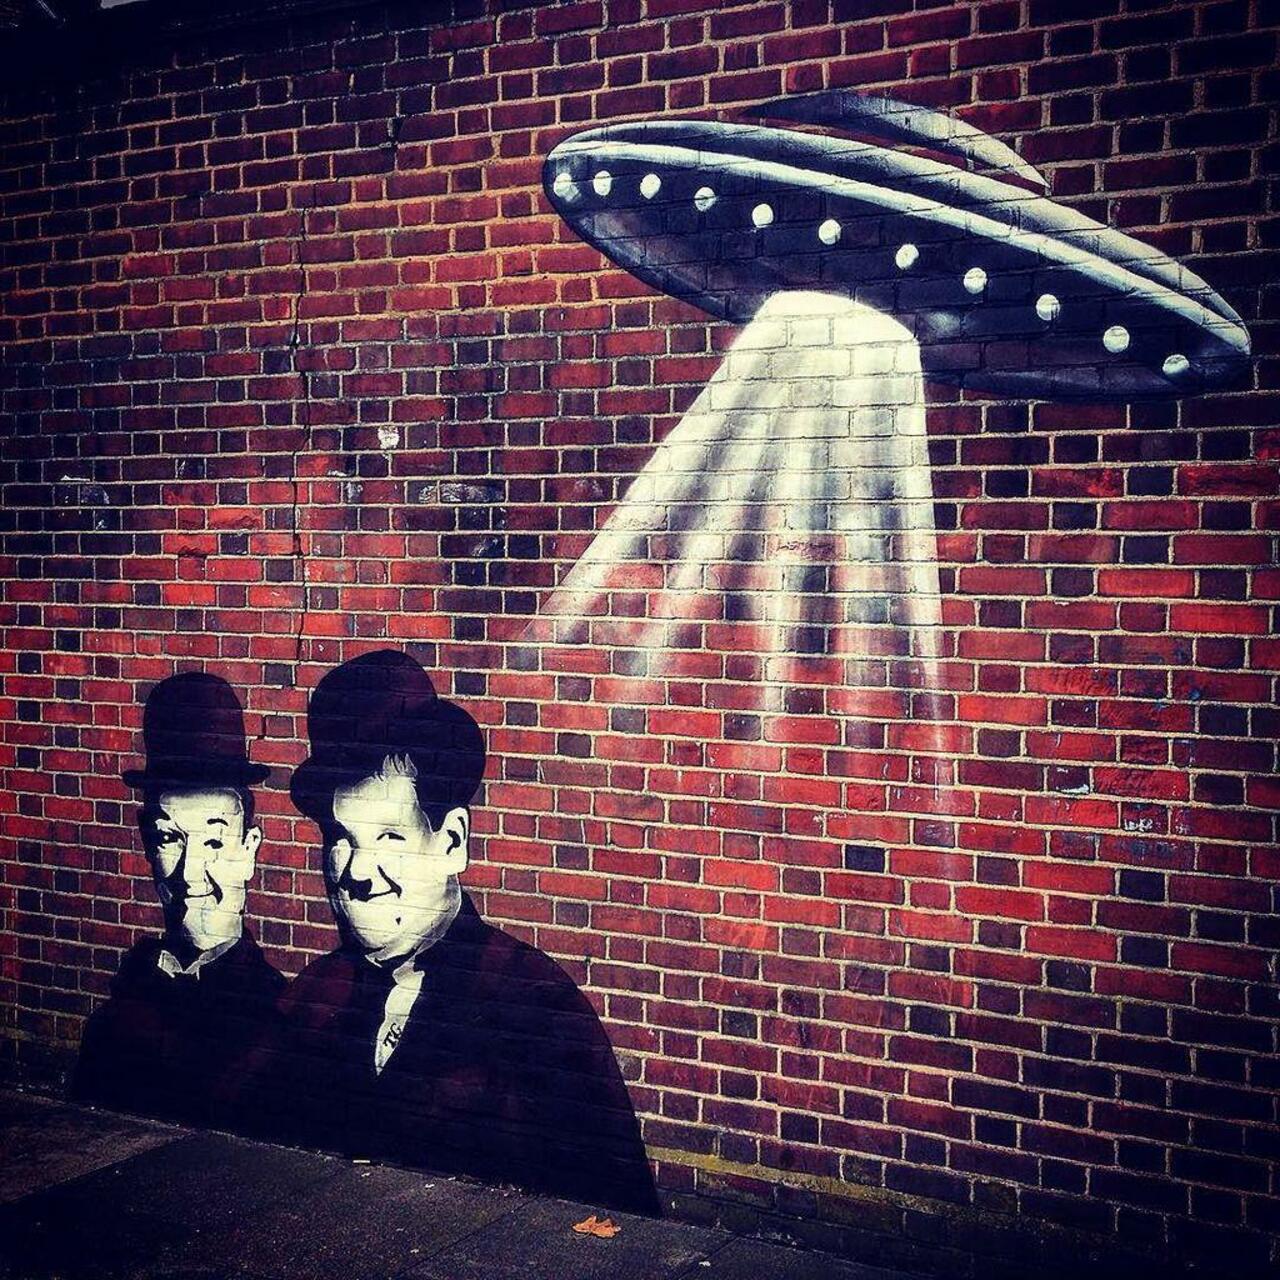 RT @StArtEverywhere: More impressive #StreetArt in #NorthLondon #LaurelAndHardy #UFO #Graffiti #London #harringay #streetartlondon #graf… http://t.co/9lZASrOU4A